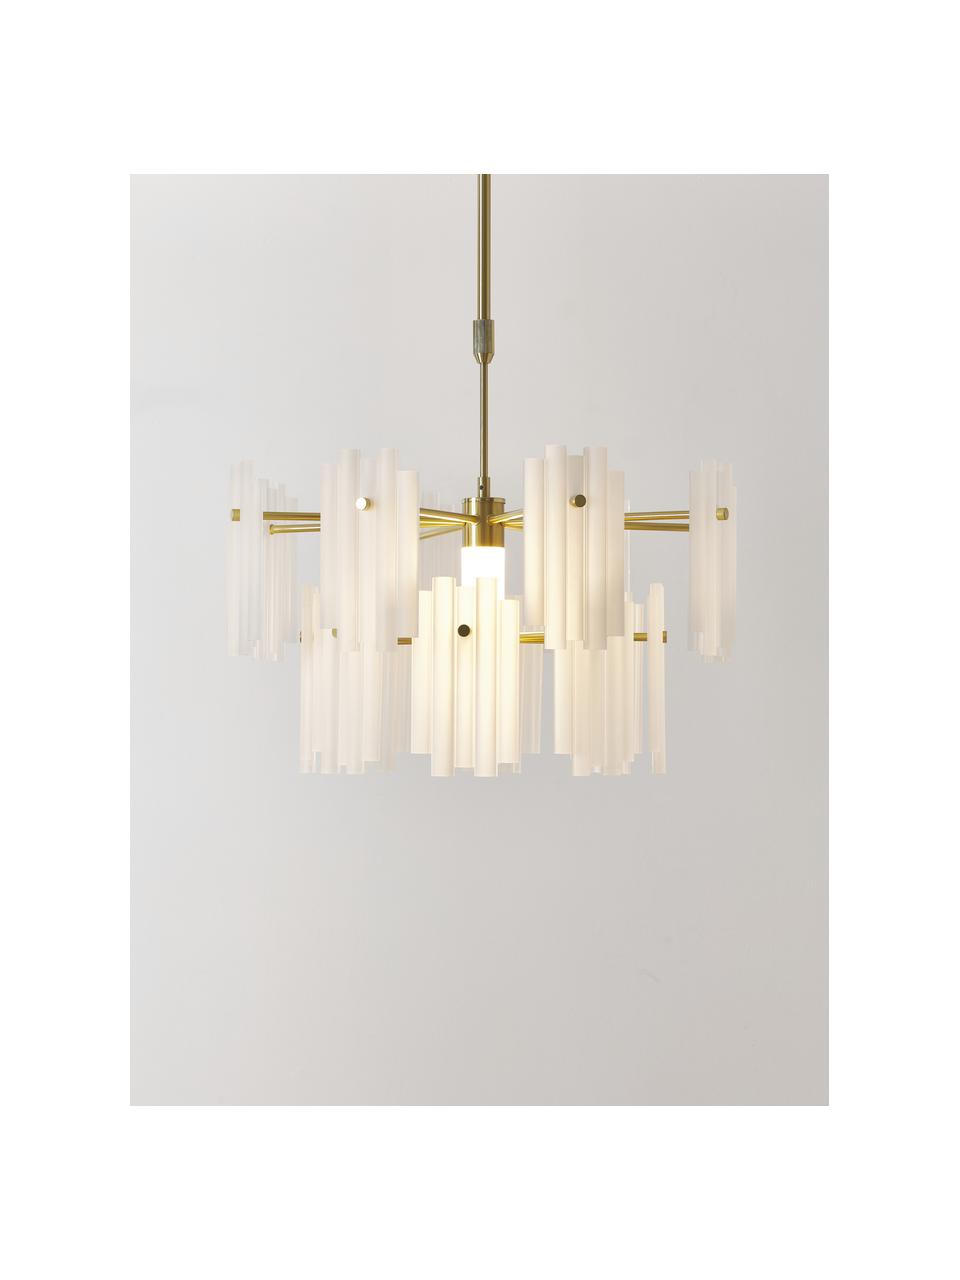 Grote LED hanglamp Alenia in messingkleur, Lampenkap: acrylglas, Baldakijn: vermessingd metaal, Wit, messingkleurig, Ø 61 x H 98 cm